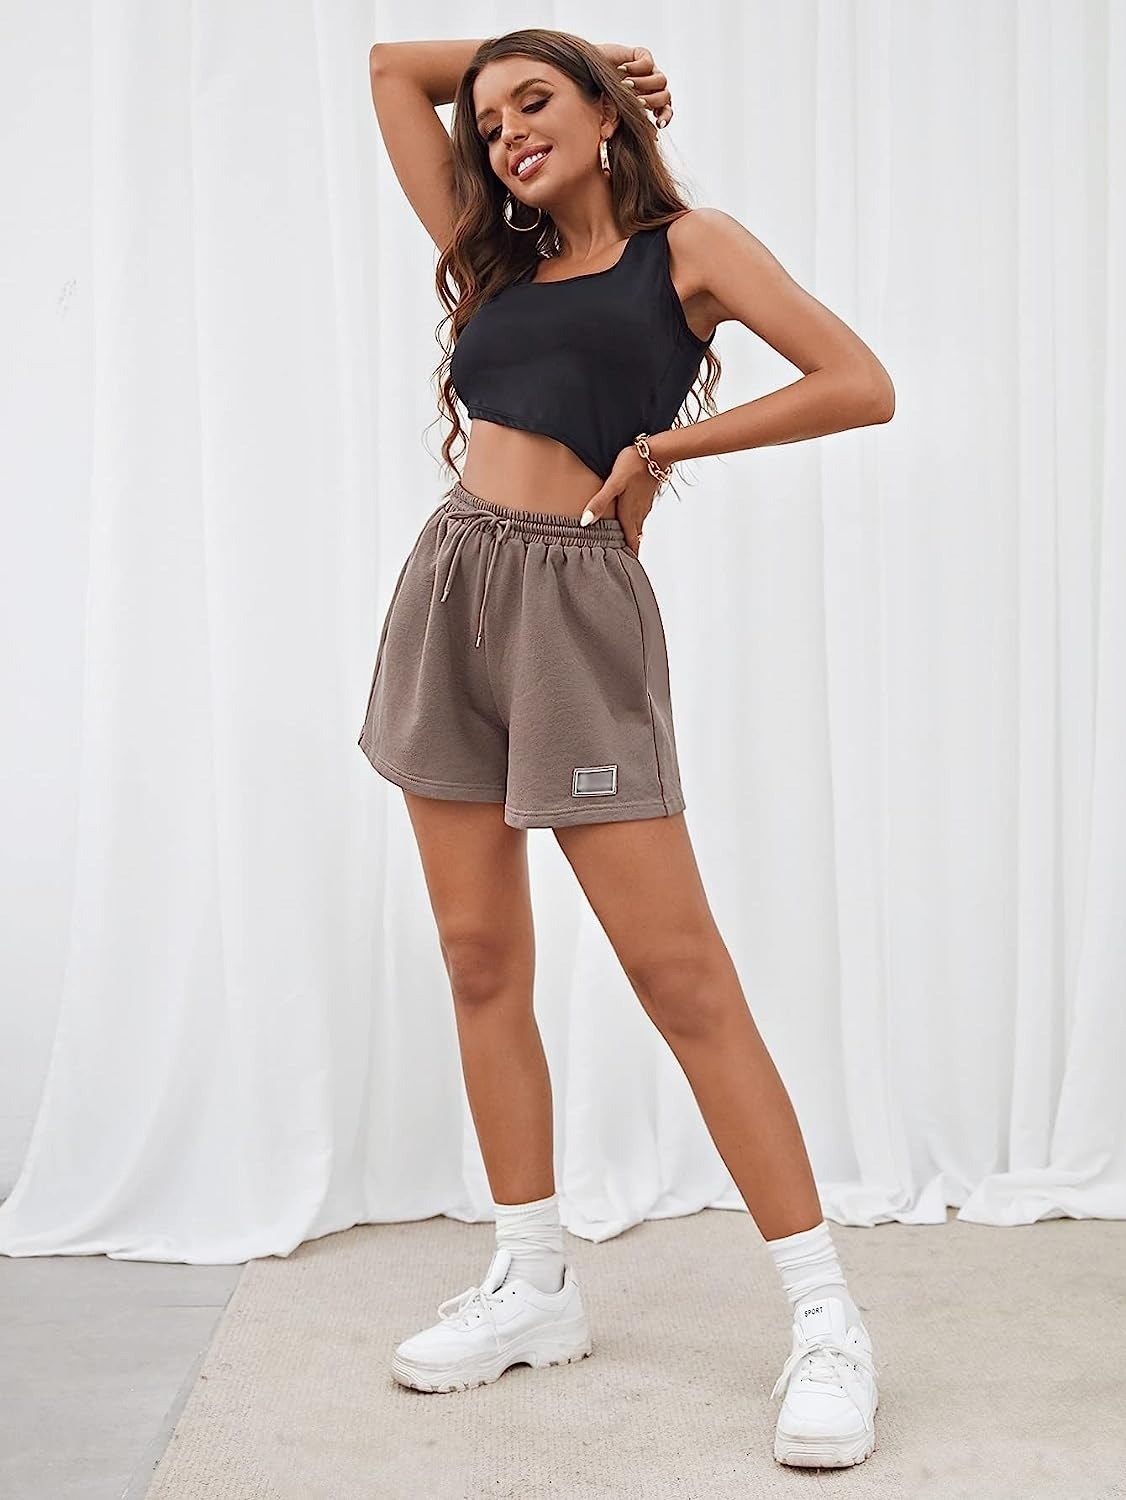 model wearing light brown sweat shorts